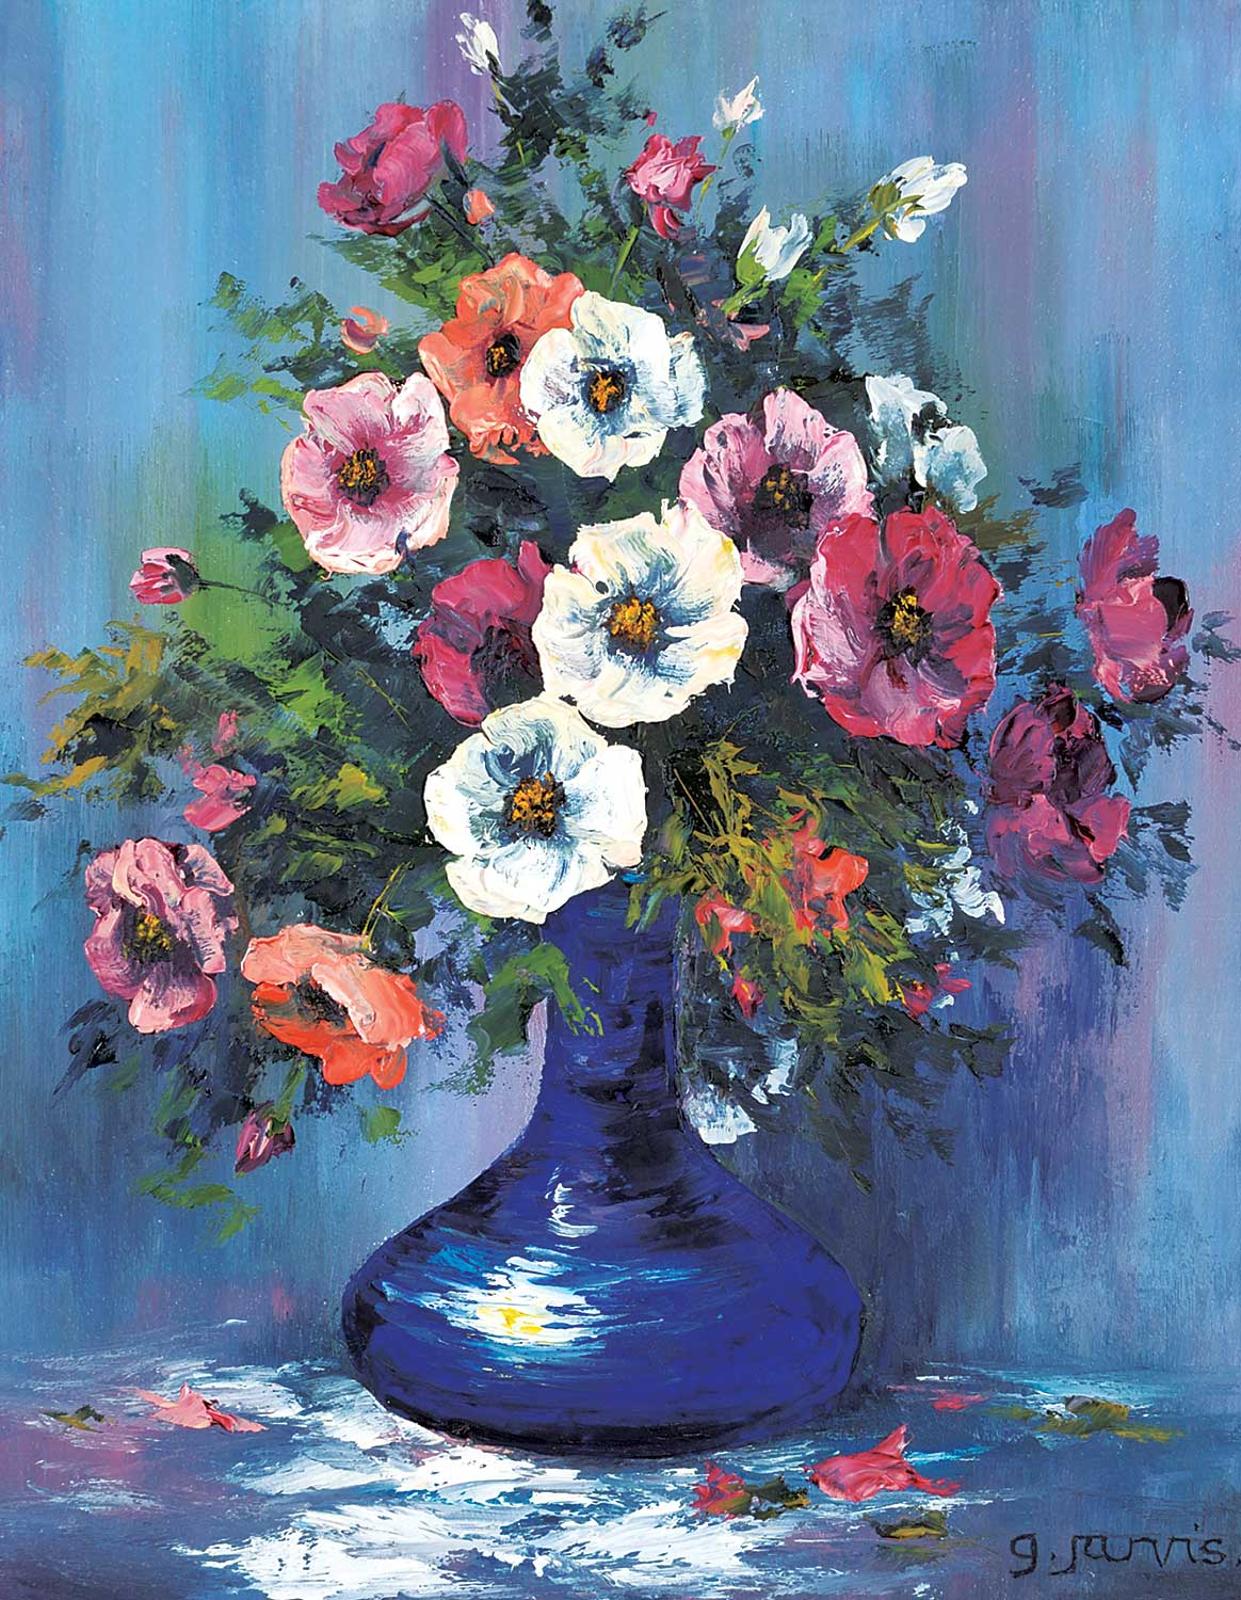 Georgia Jarvis (1944-1990) - Untitled - Flowers in a Blue Vase